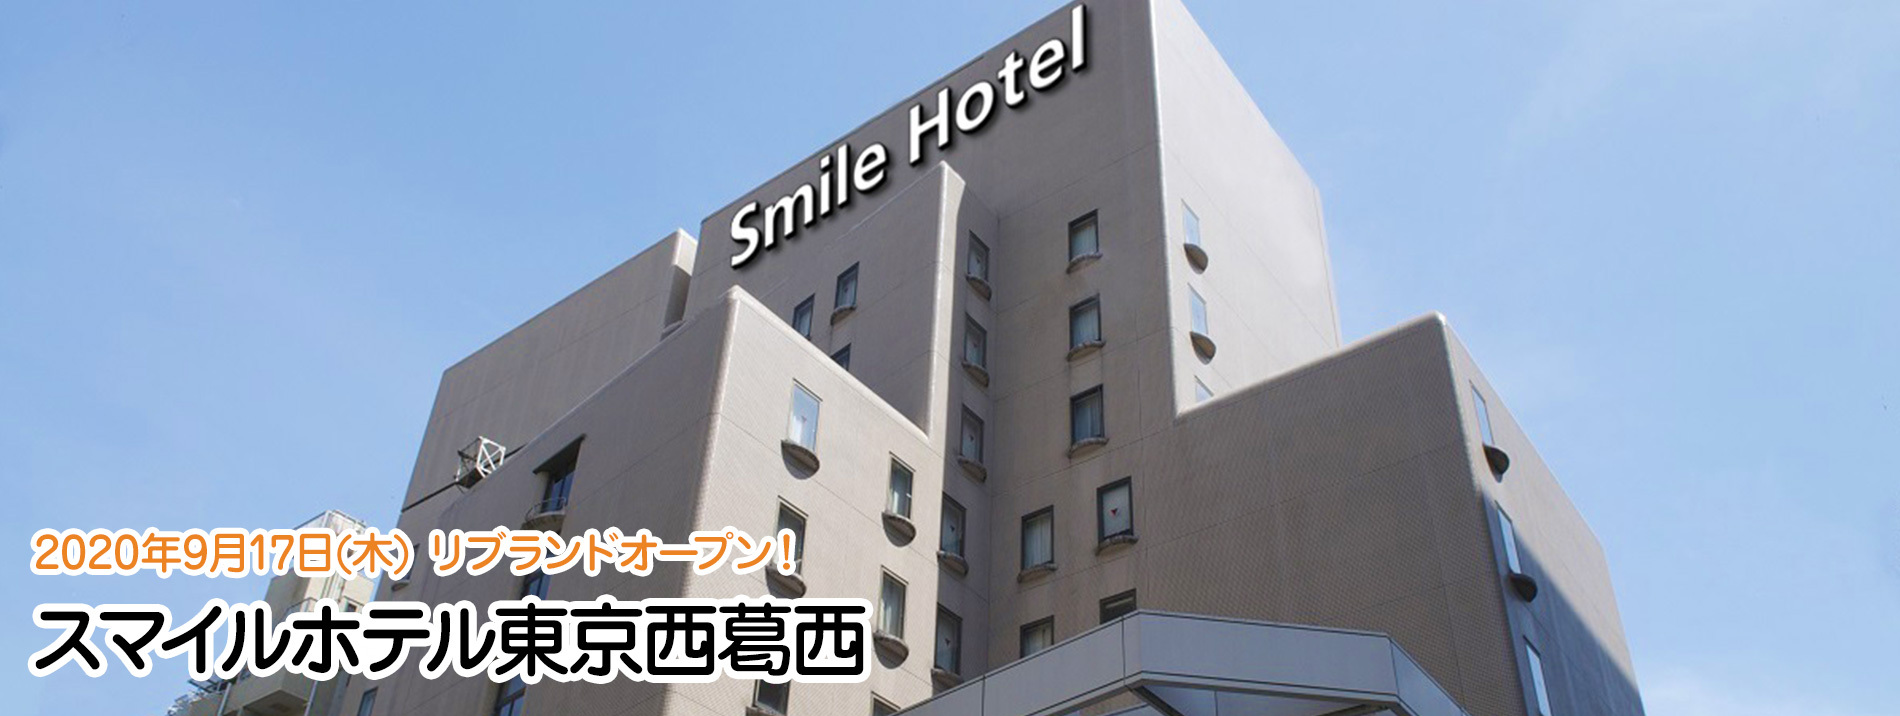 葛西 西 スマイル ホテル スマイルホテル東京西葛西 /